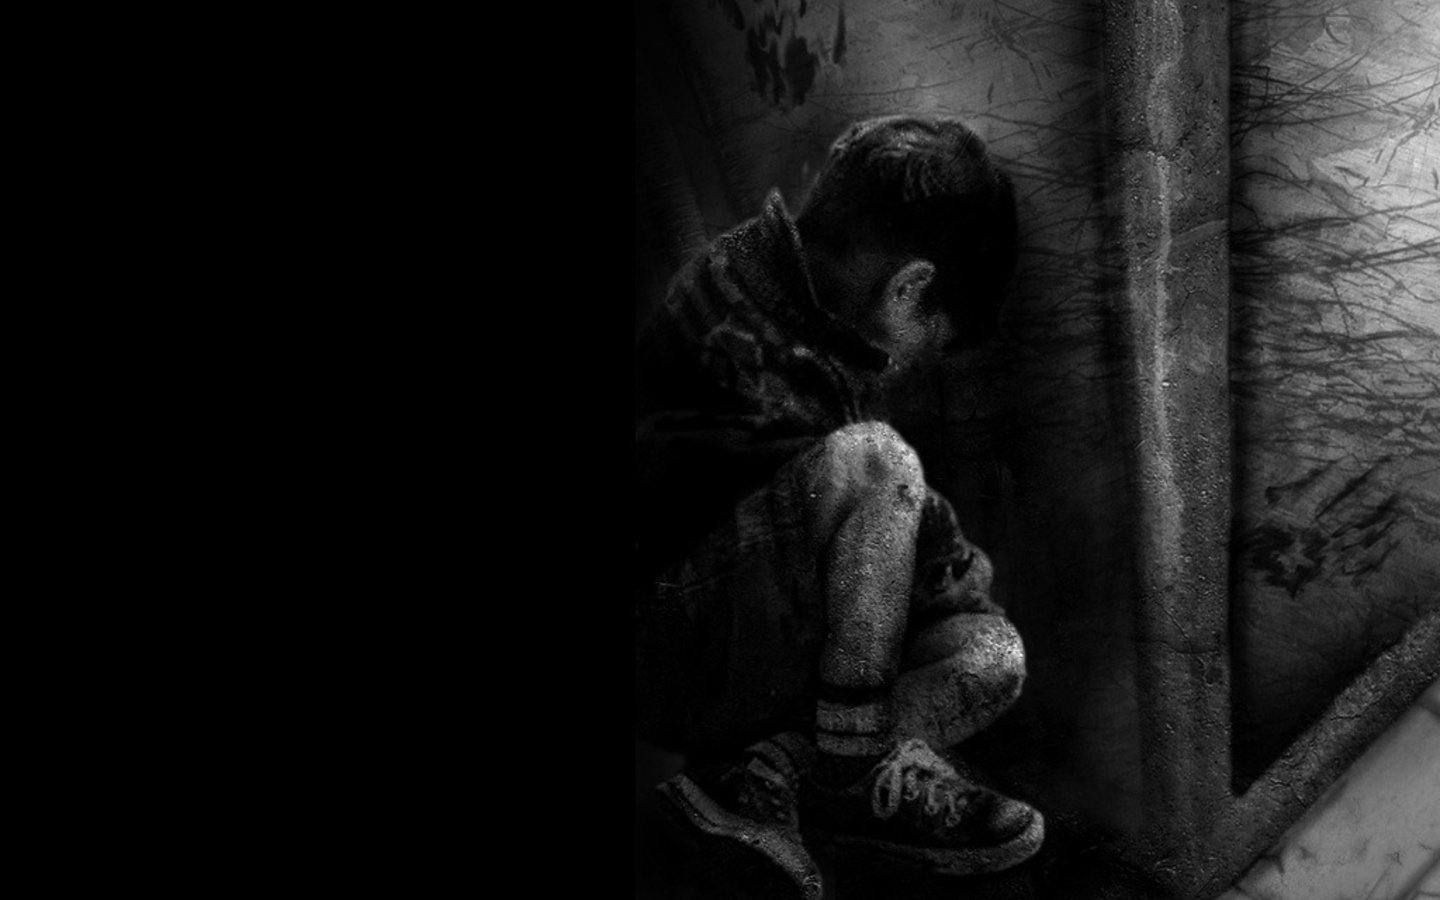 lonely sad boy wallpaper,black,darkness,black and white,monochrome photography,monochrome